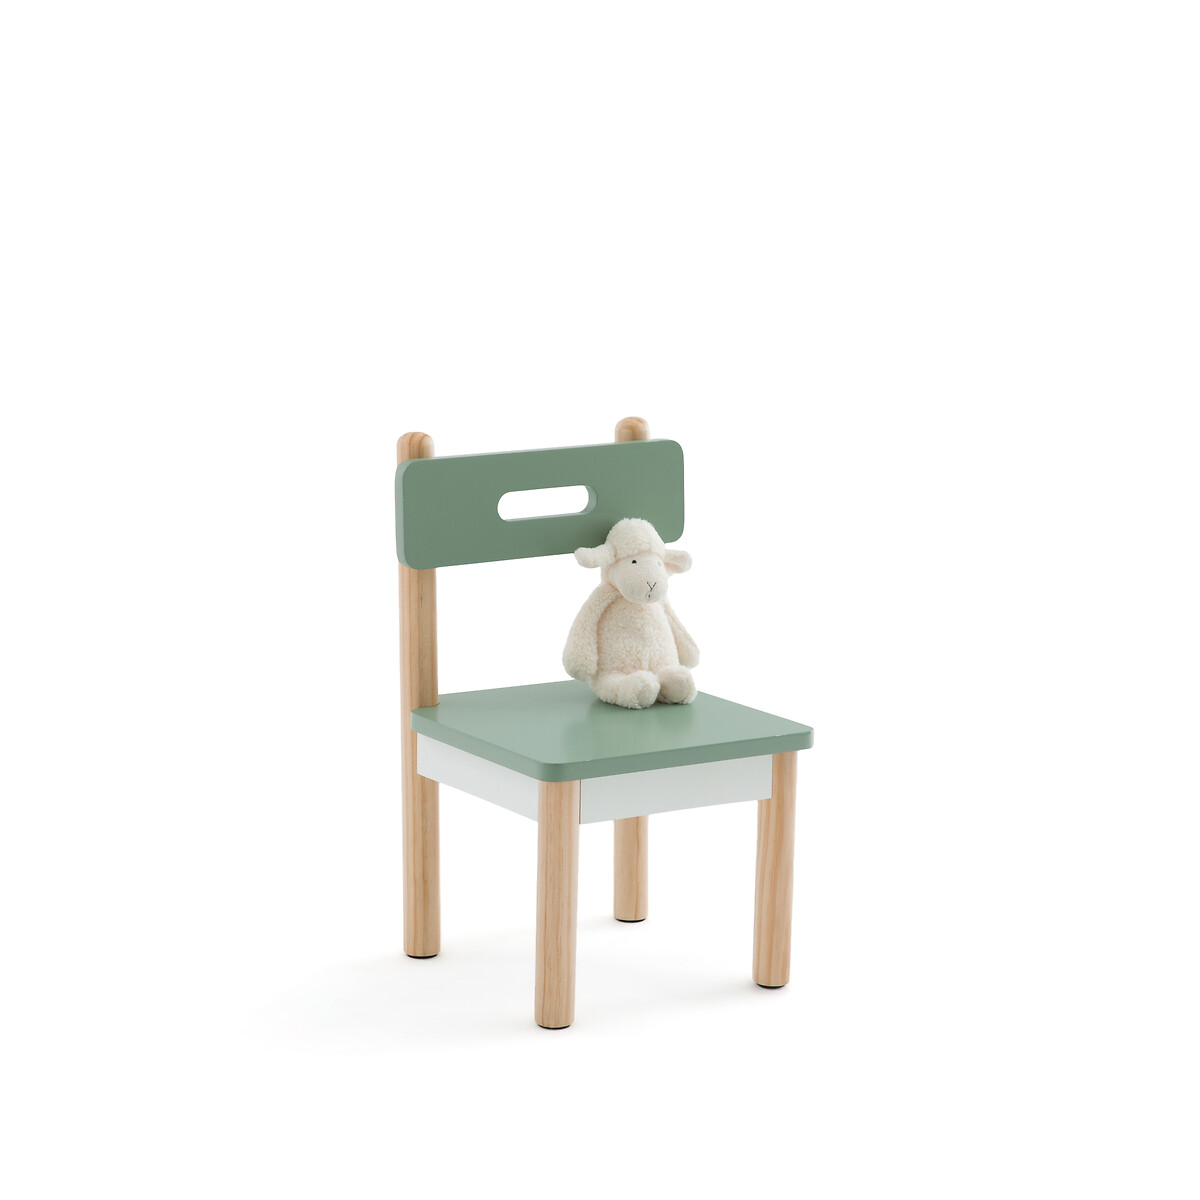 New Montessori Child’s Chair